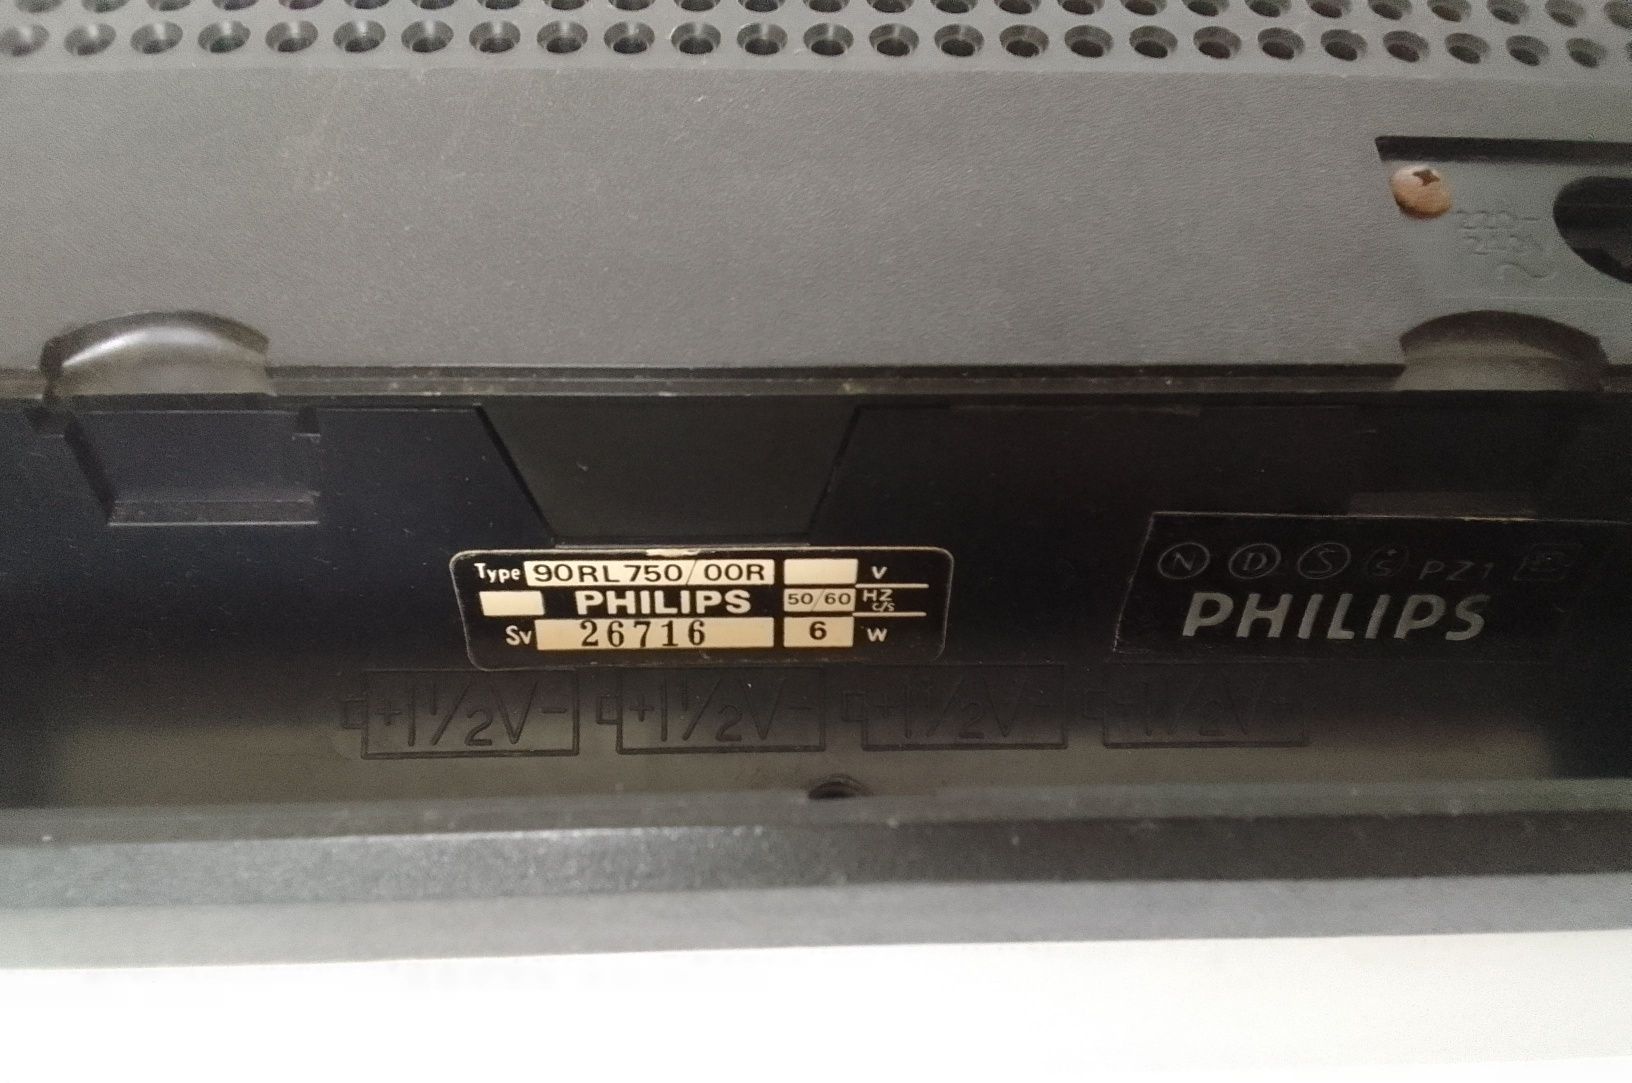 Rádio Philips 90RL 750/00R